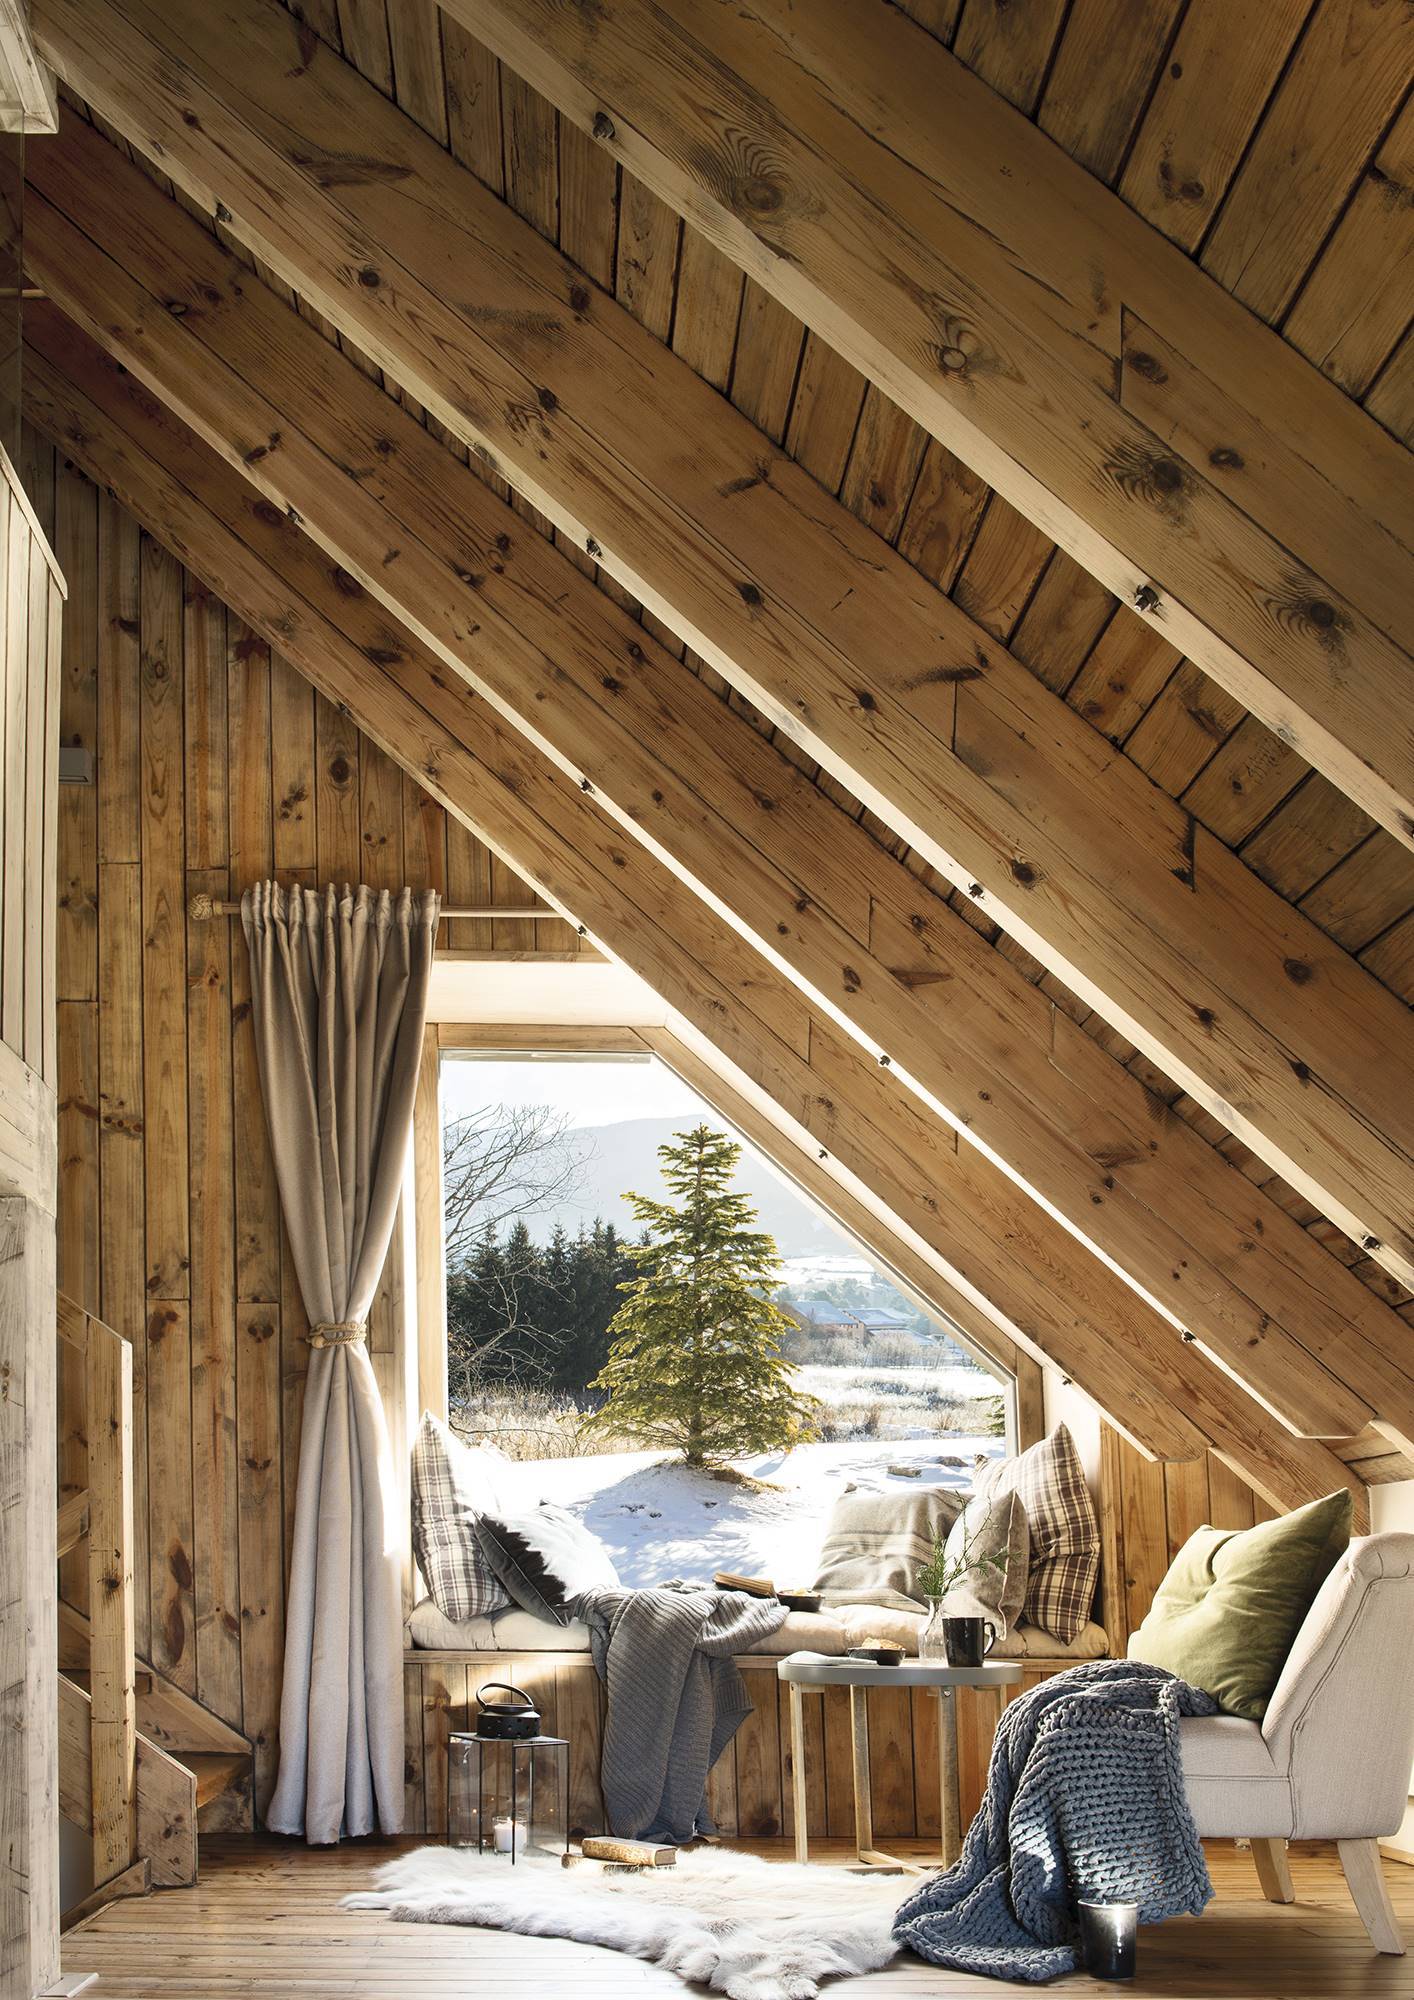 Casa de montaña revestida de madera con mirador al exterior nevado